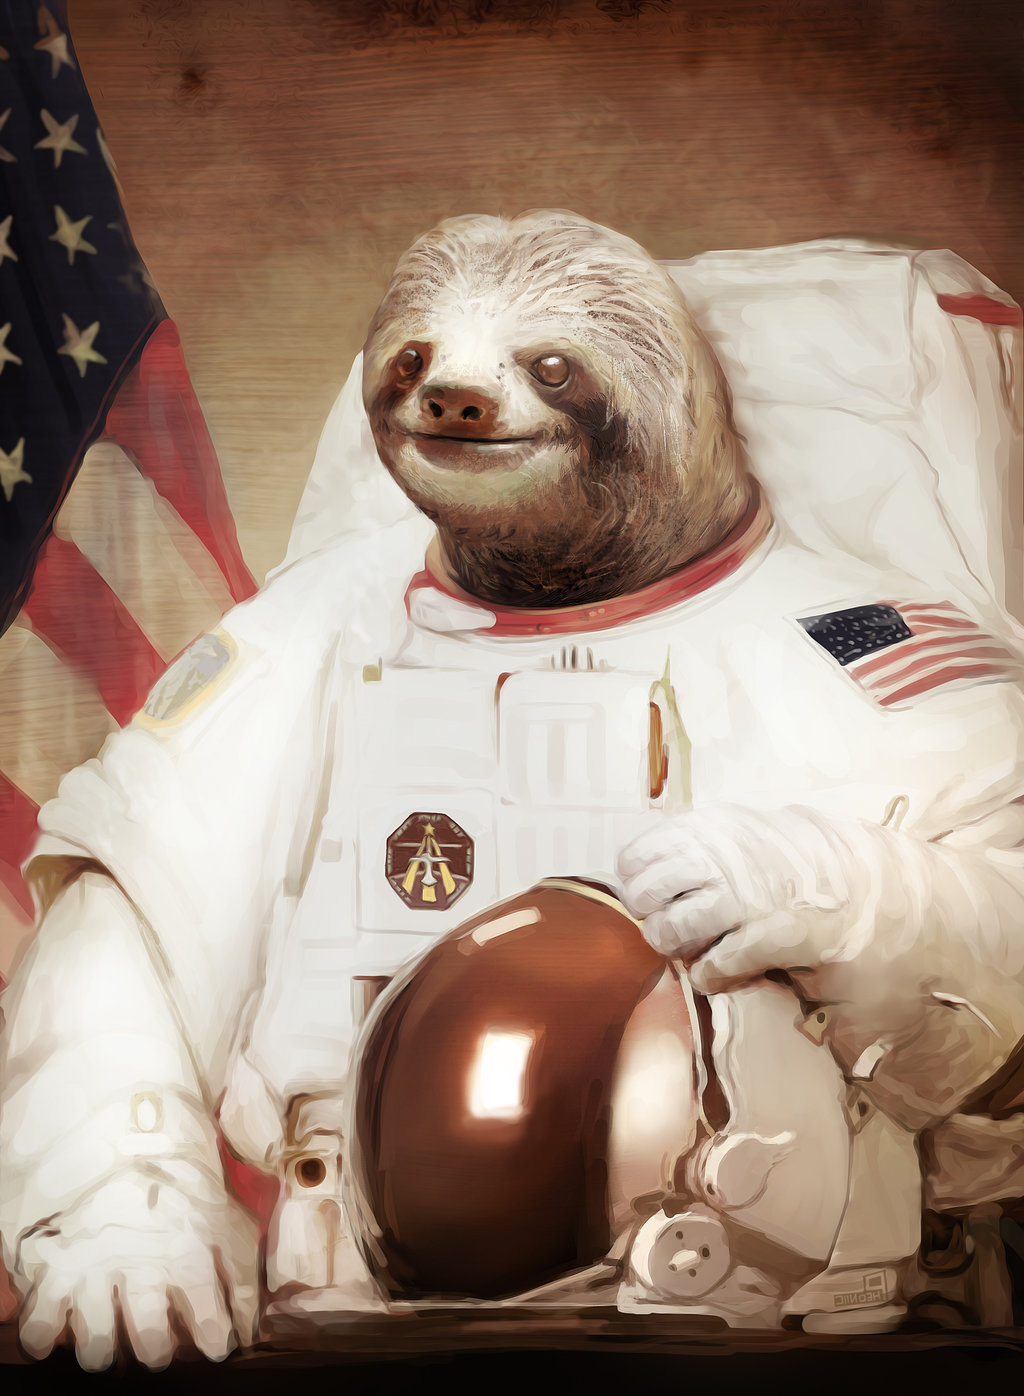 44+] Sloth Astronaut Wallpaper on ...